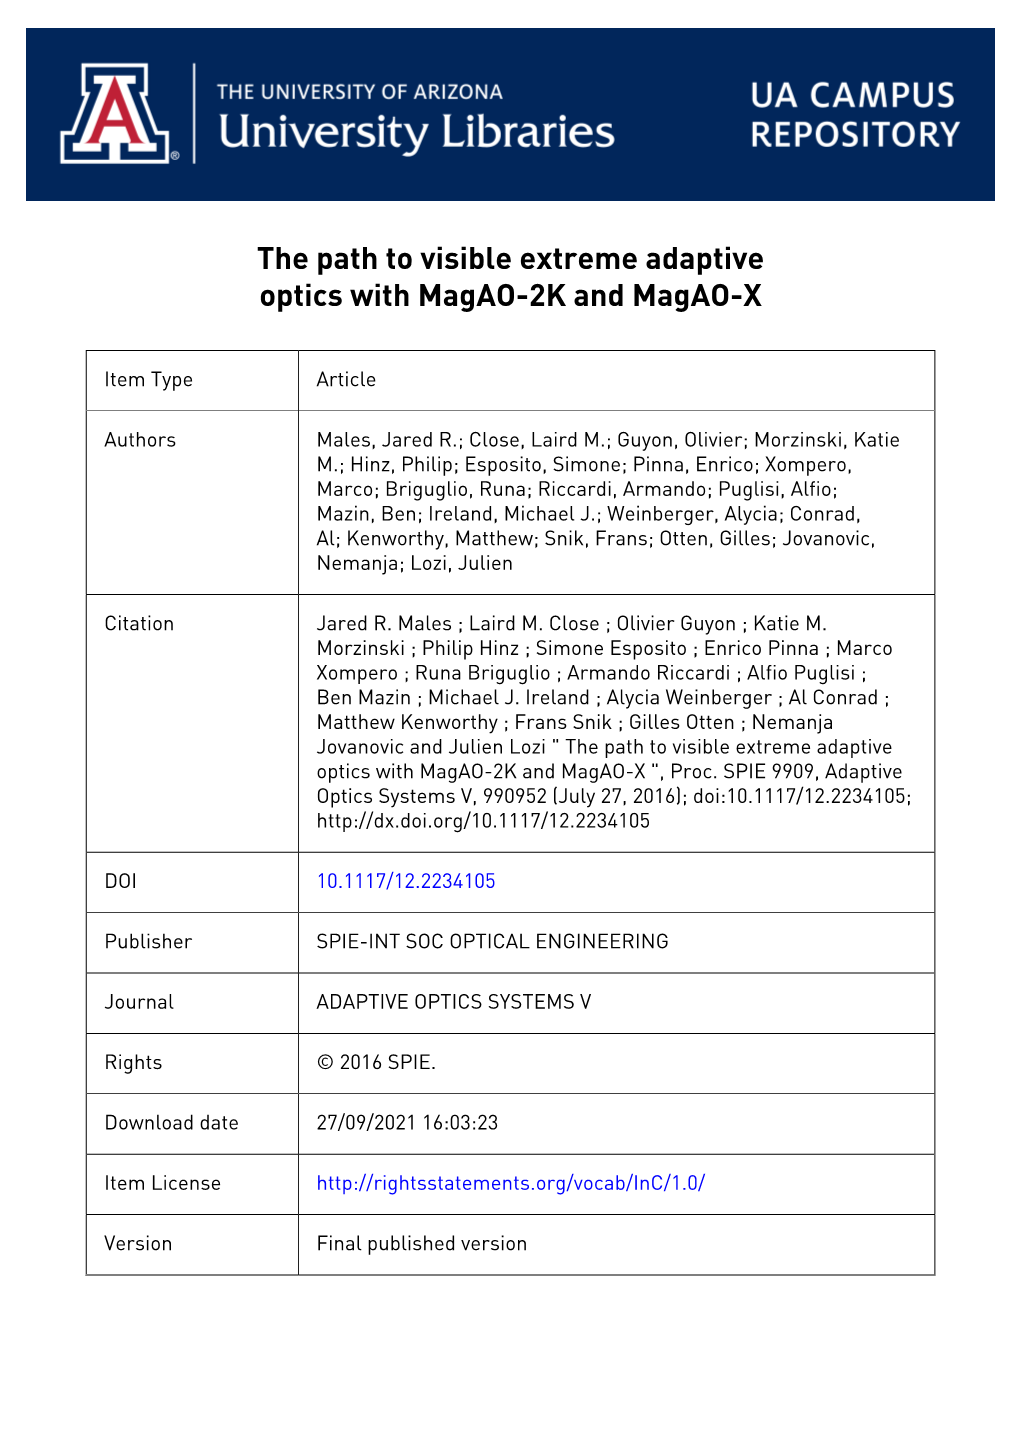 The Path to Visible Extreme Adaptive Optics with Magao-2K and Magao-X